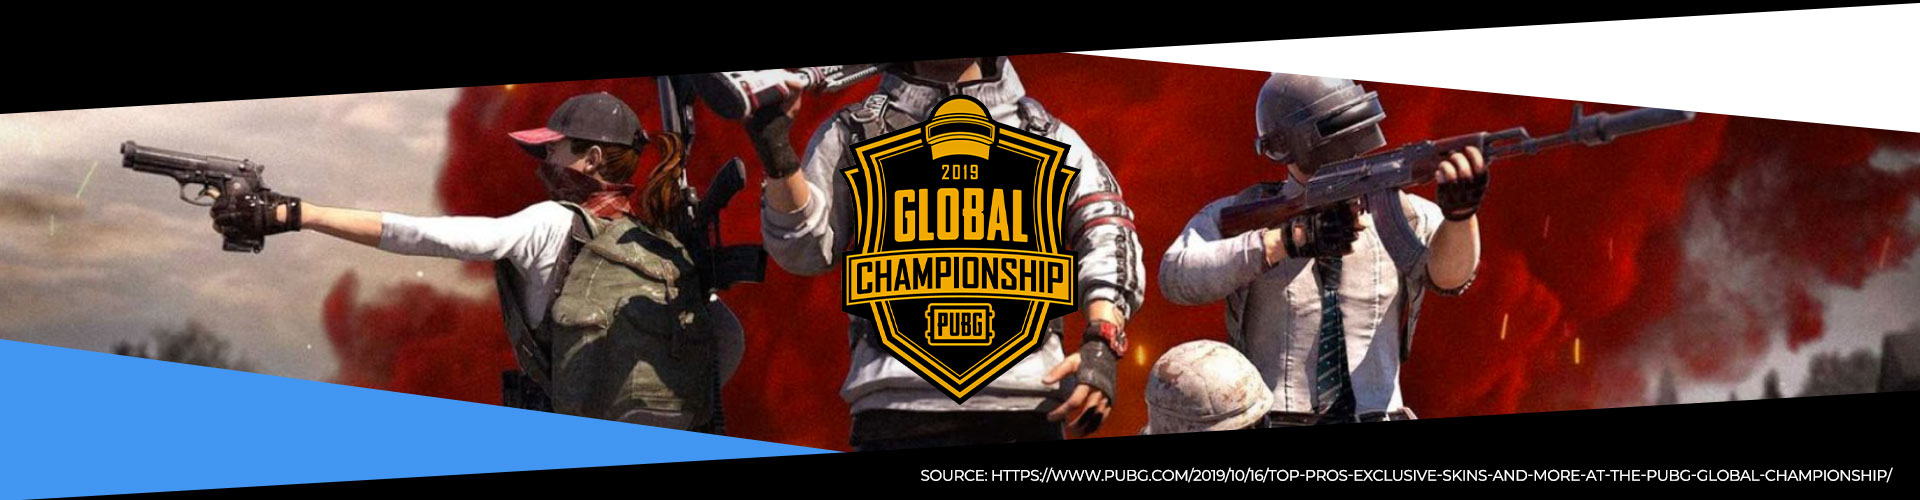 PUBG Global Championship 2019